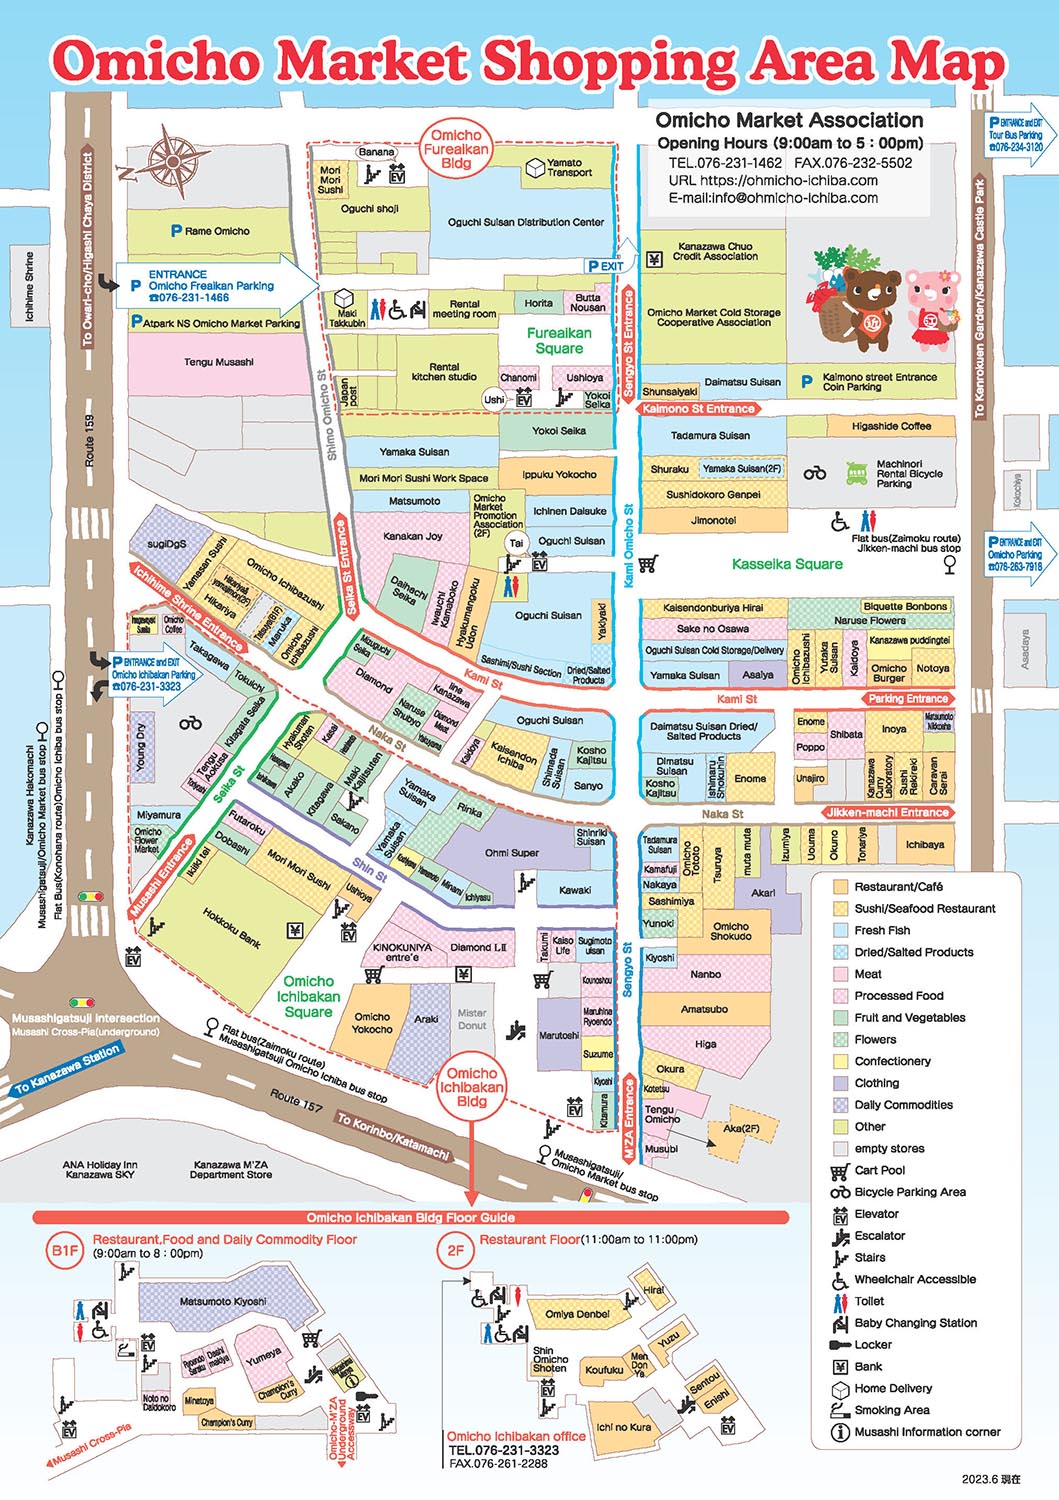 近江町市場商店街英語版MAP(English Map)